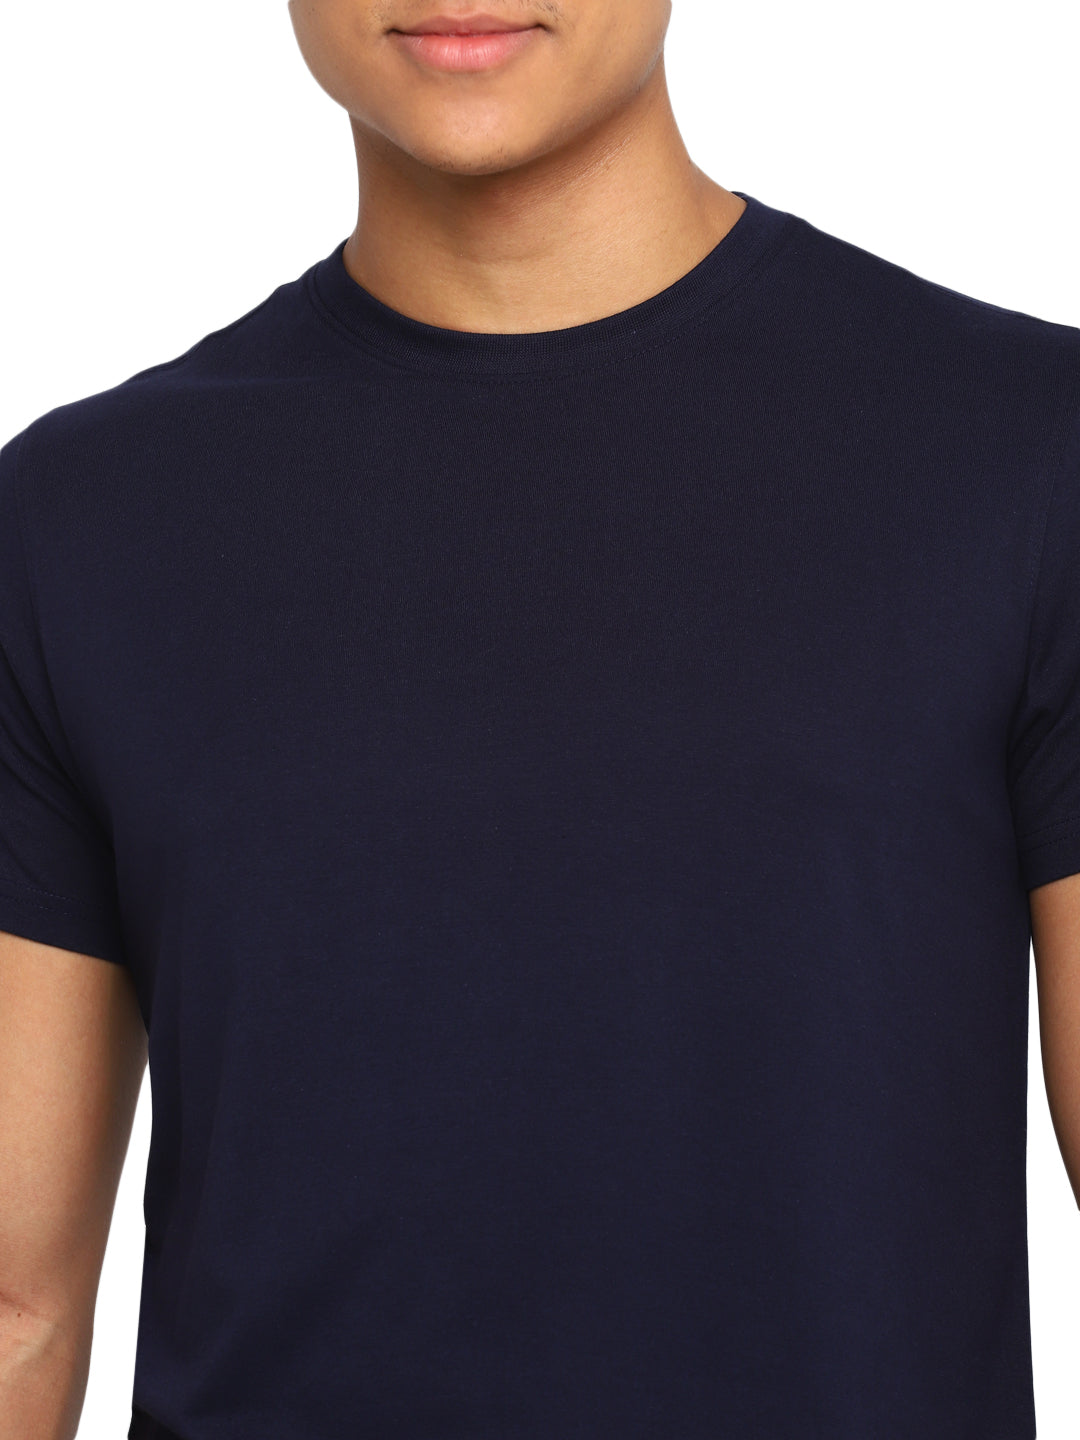 100% Cotton Round Neck T-Shirt for Men Regular Fit - Navy